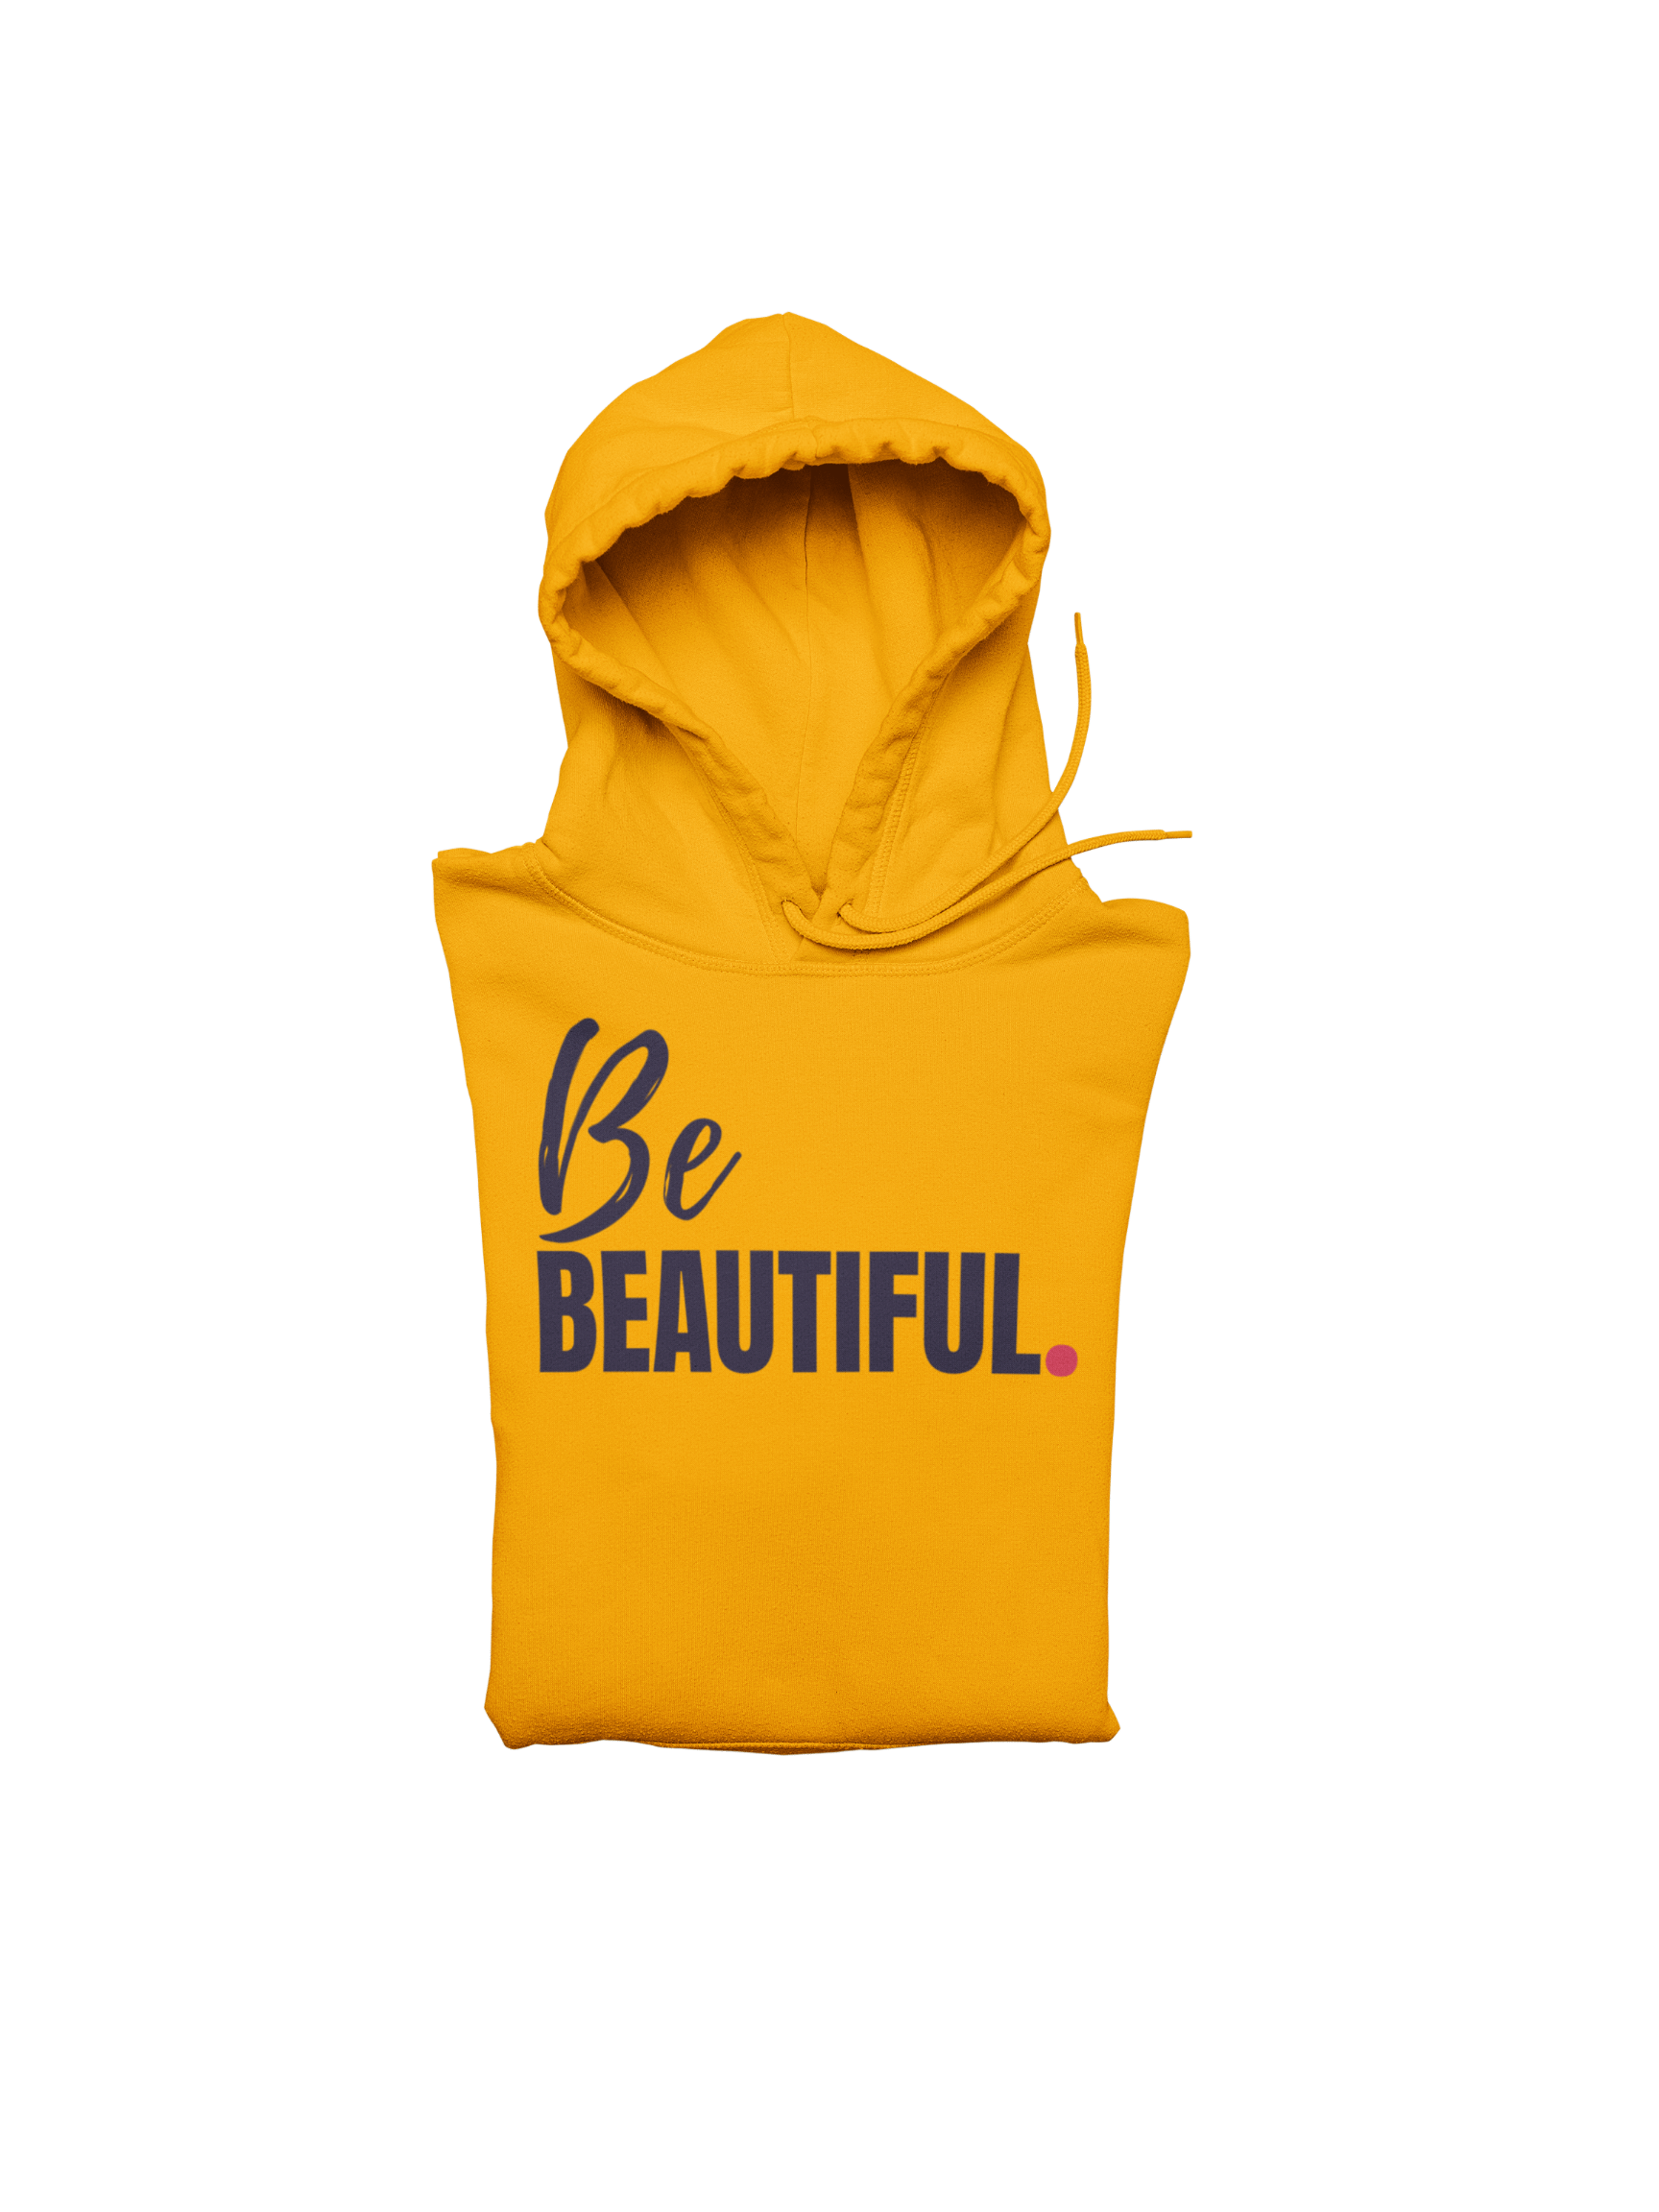 Be Beautiful.